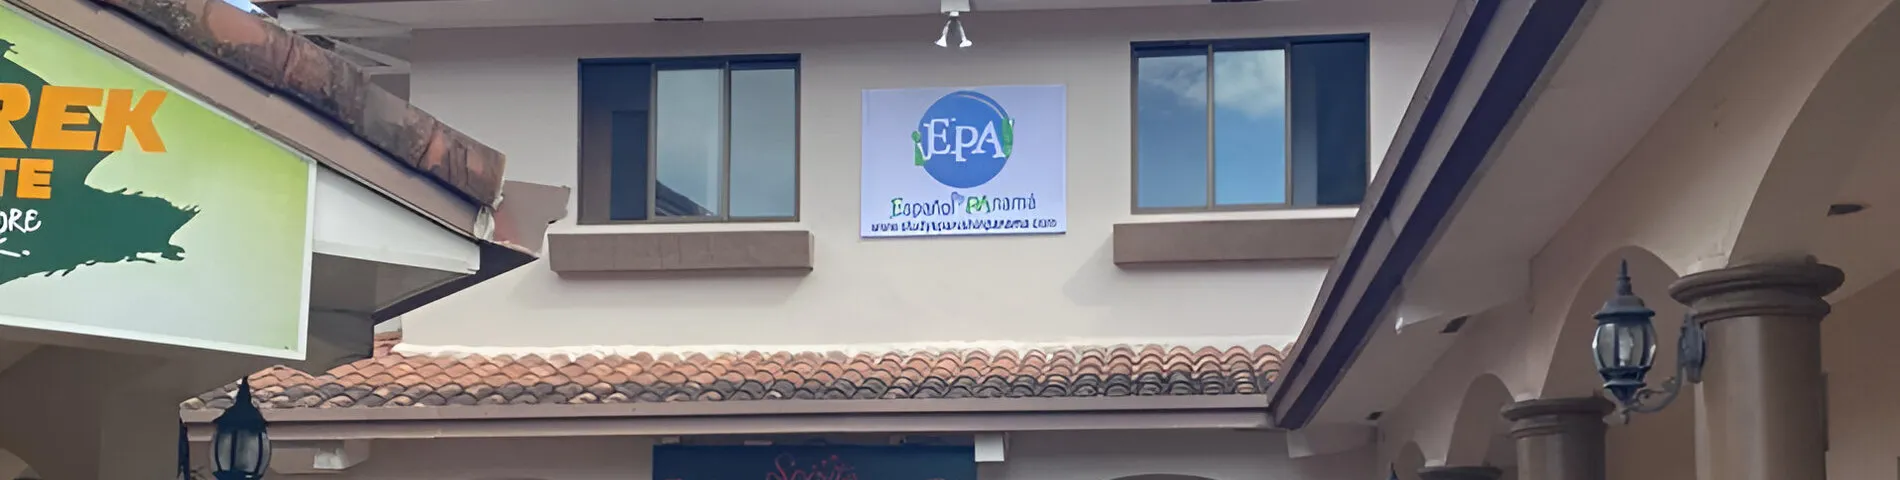 EPA! Español en Panamá bilde 1